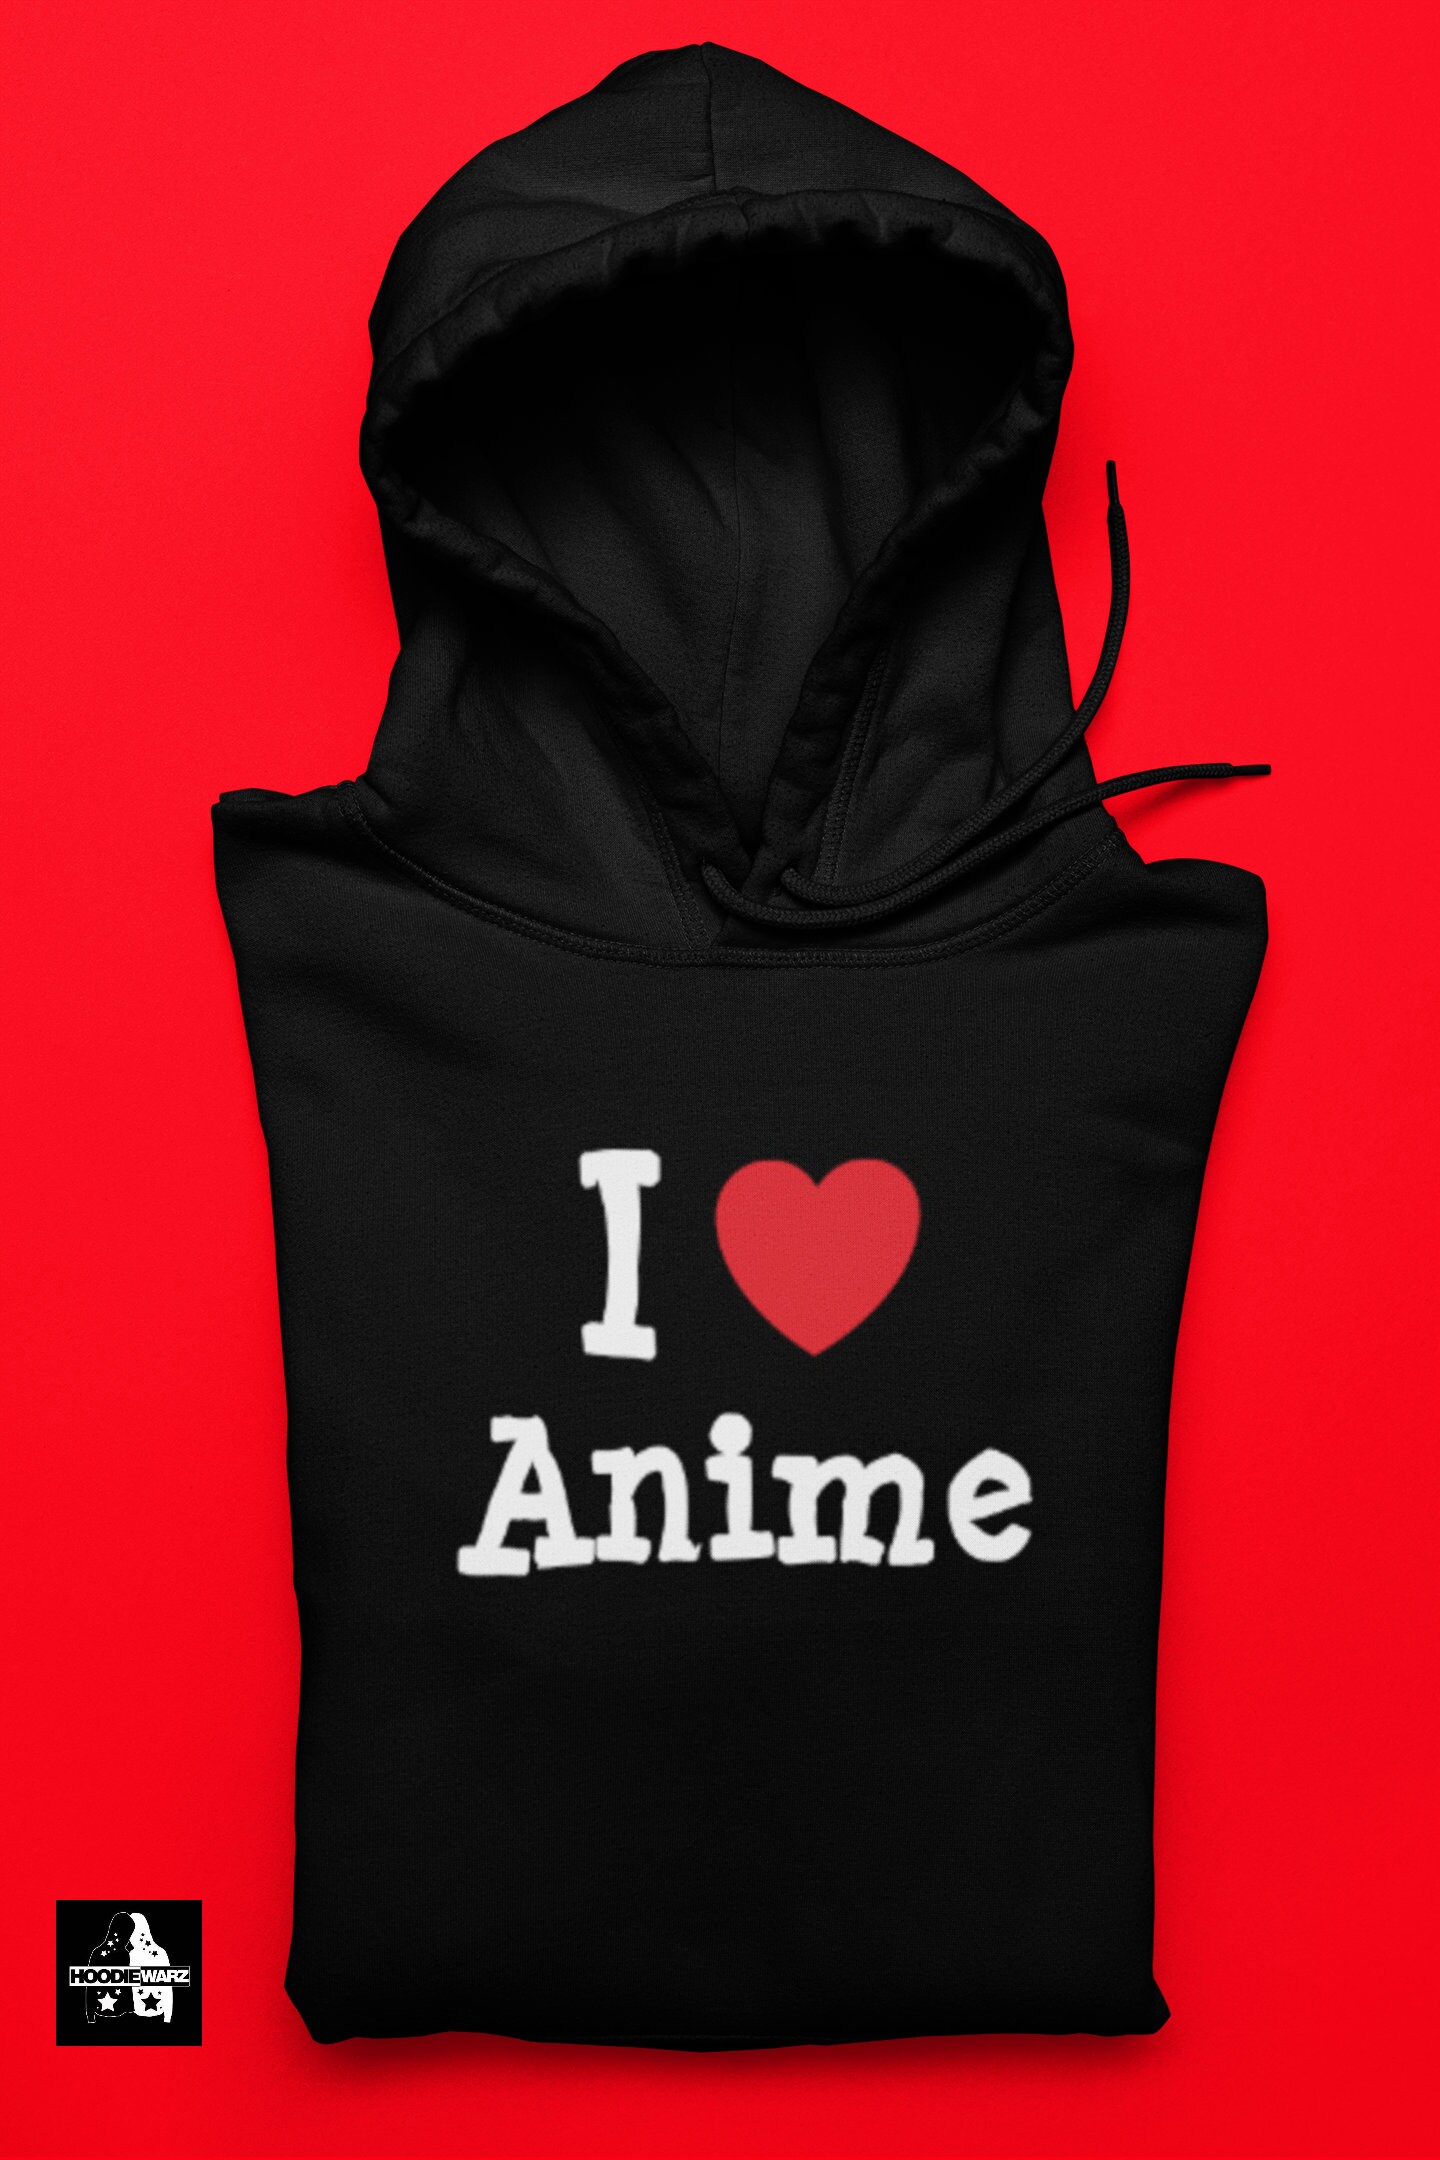 I Just Really Love Anime  Anime Girls  Hoodie  TeePublic